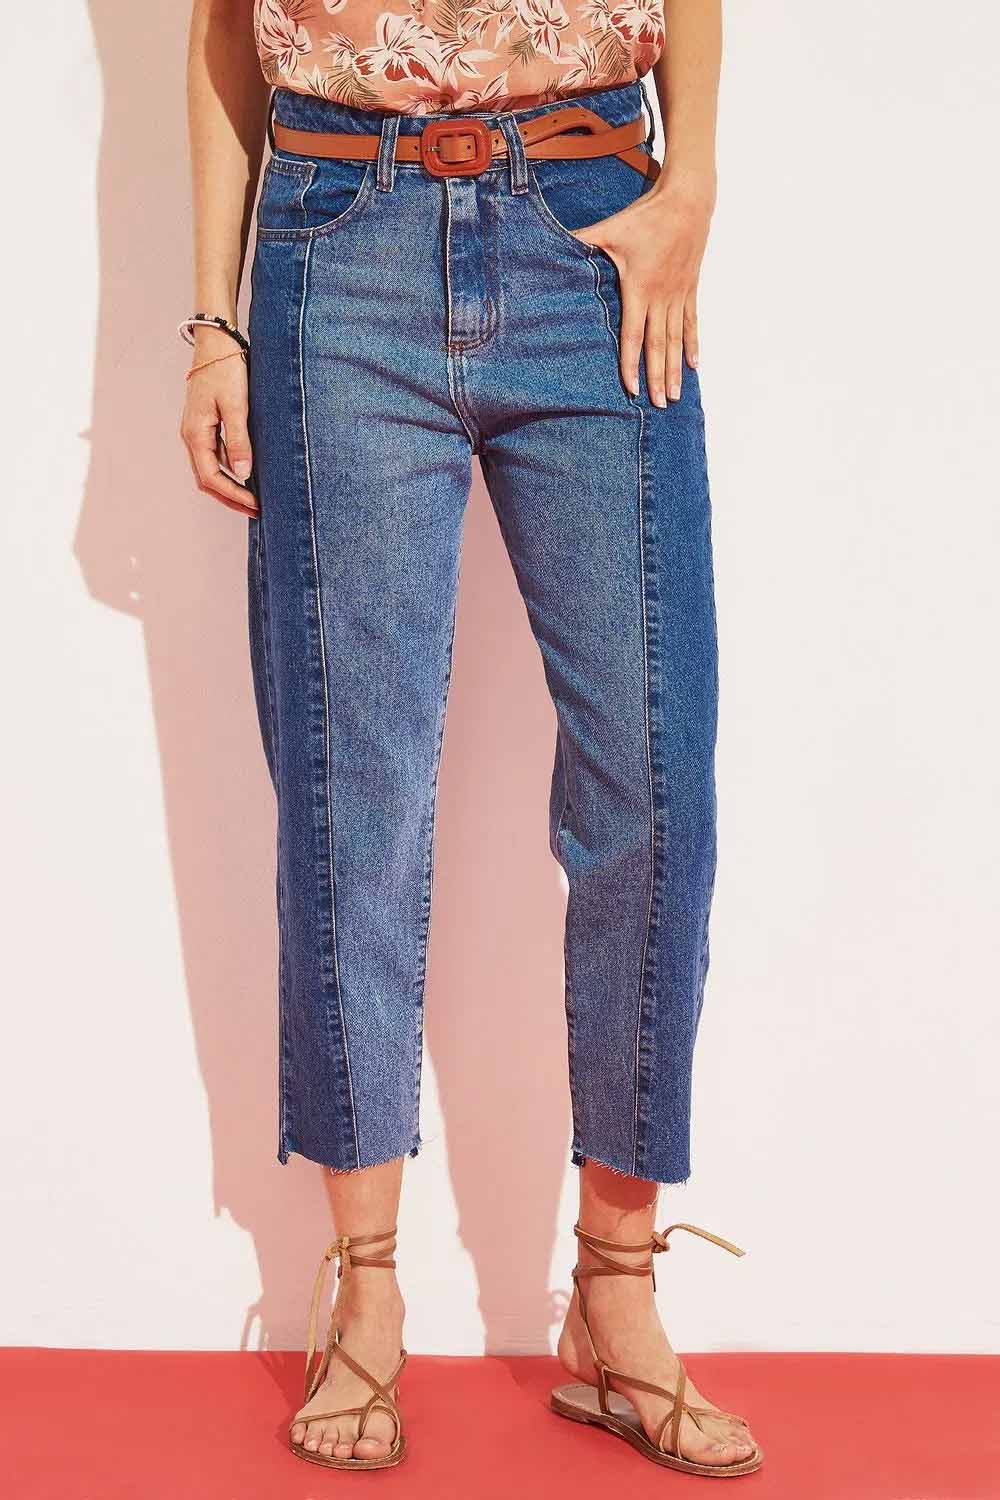 pantalon de jean de mujer moda 2022